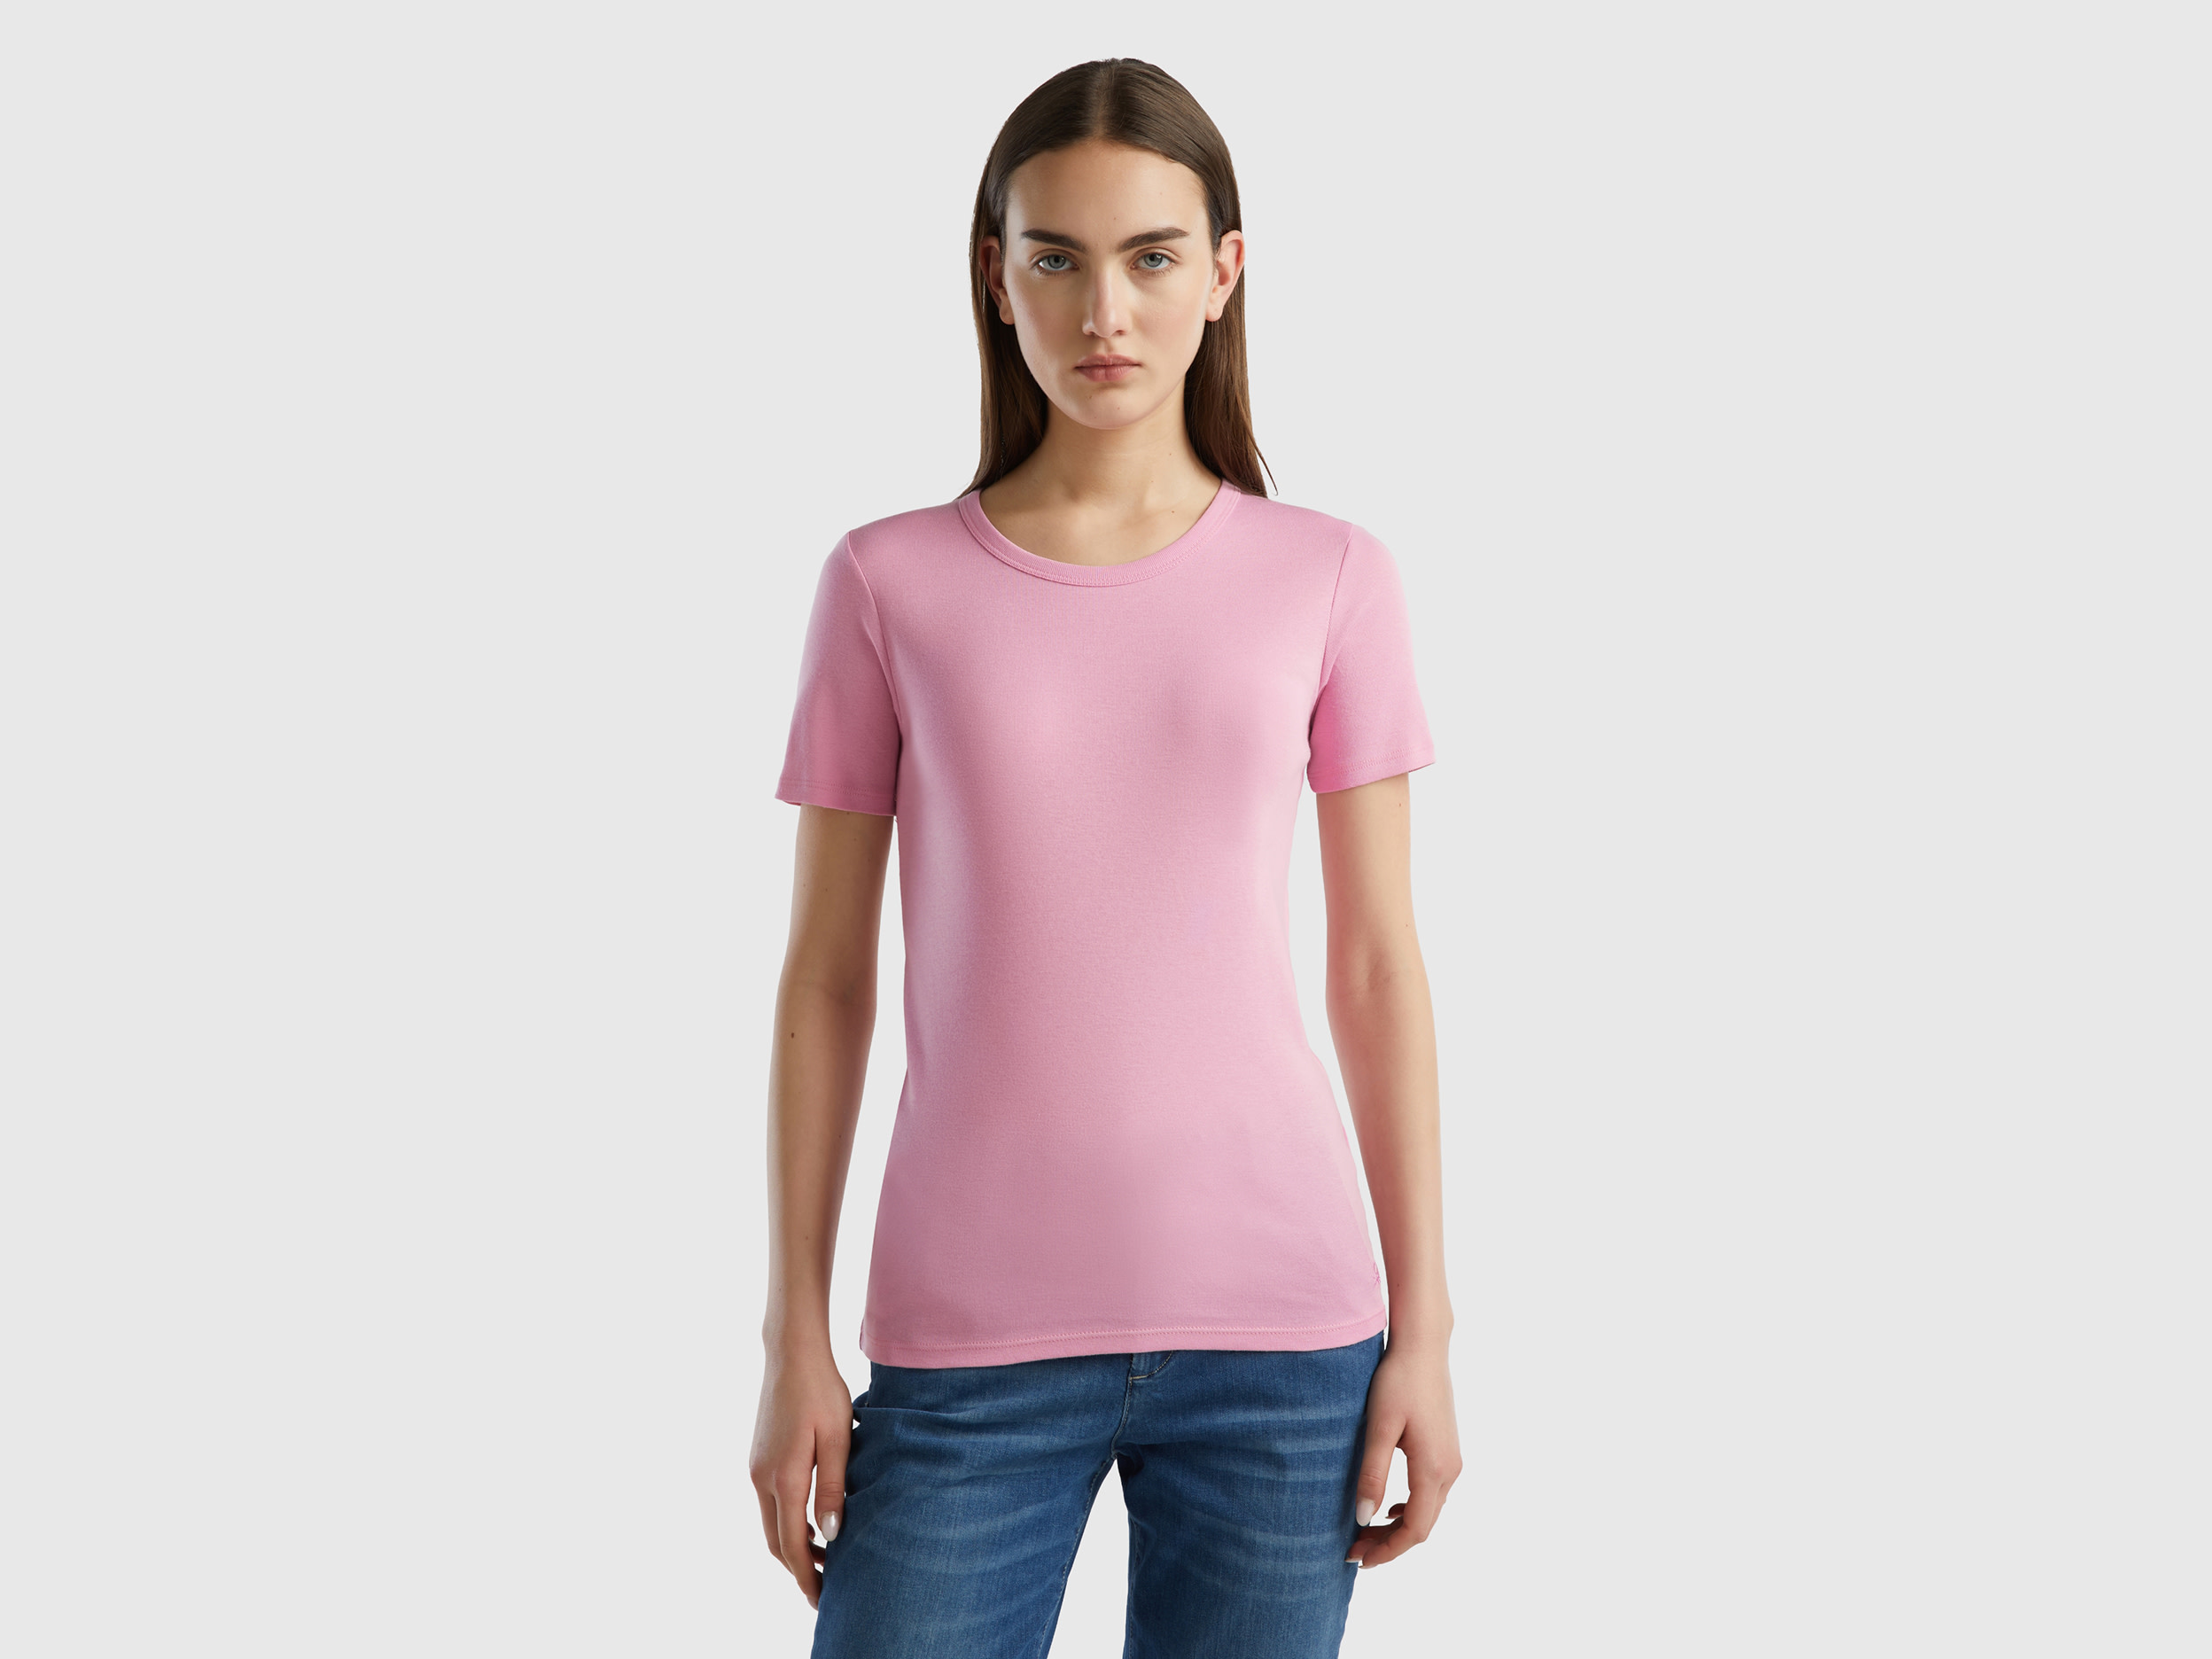 Benetton, Long Fiber Cotton T-shirt, size S, Pastel Pink, Women